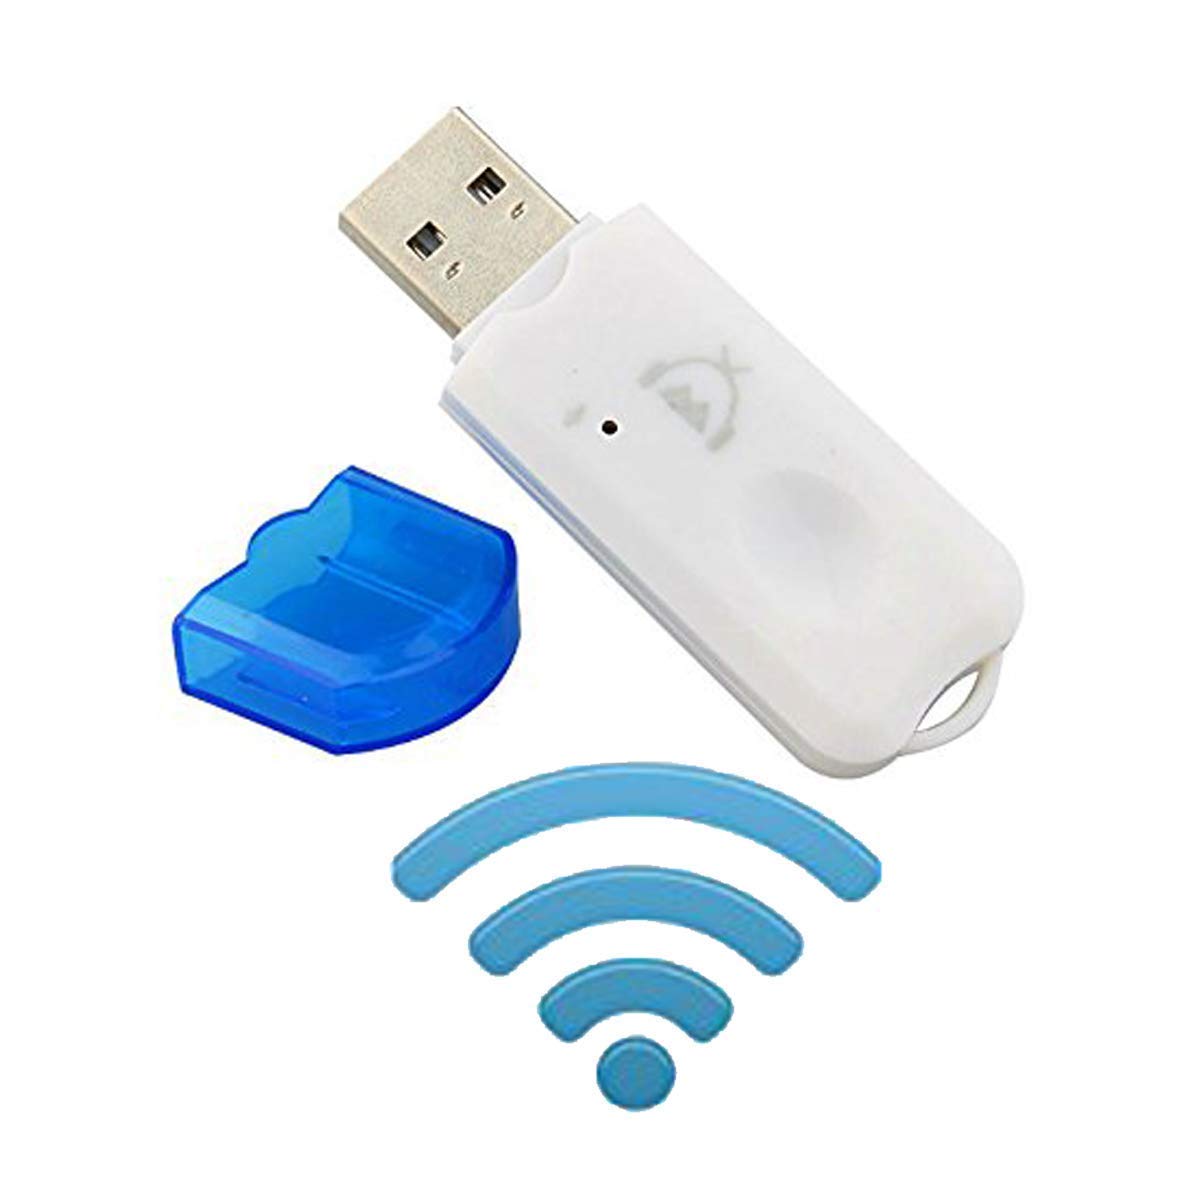 USB AUX Bluetooth 5.0 Car Kit Wireless Audio Receiver USB Dongle